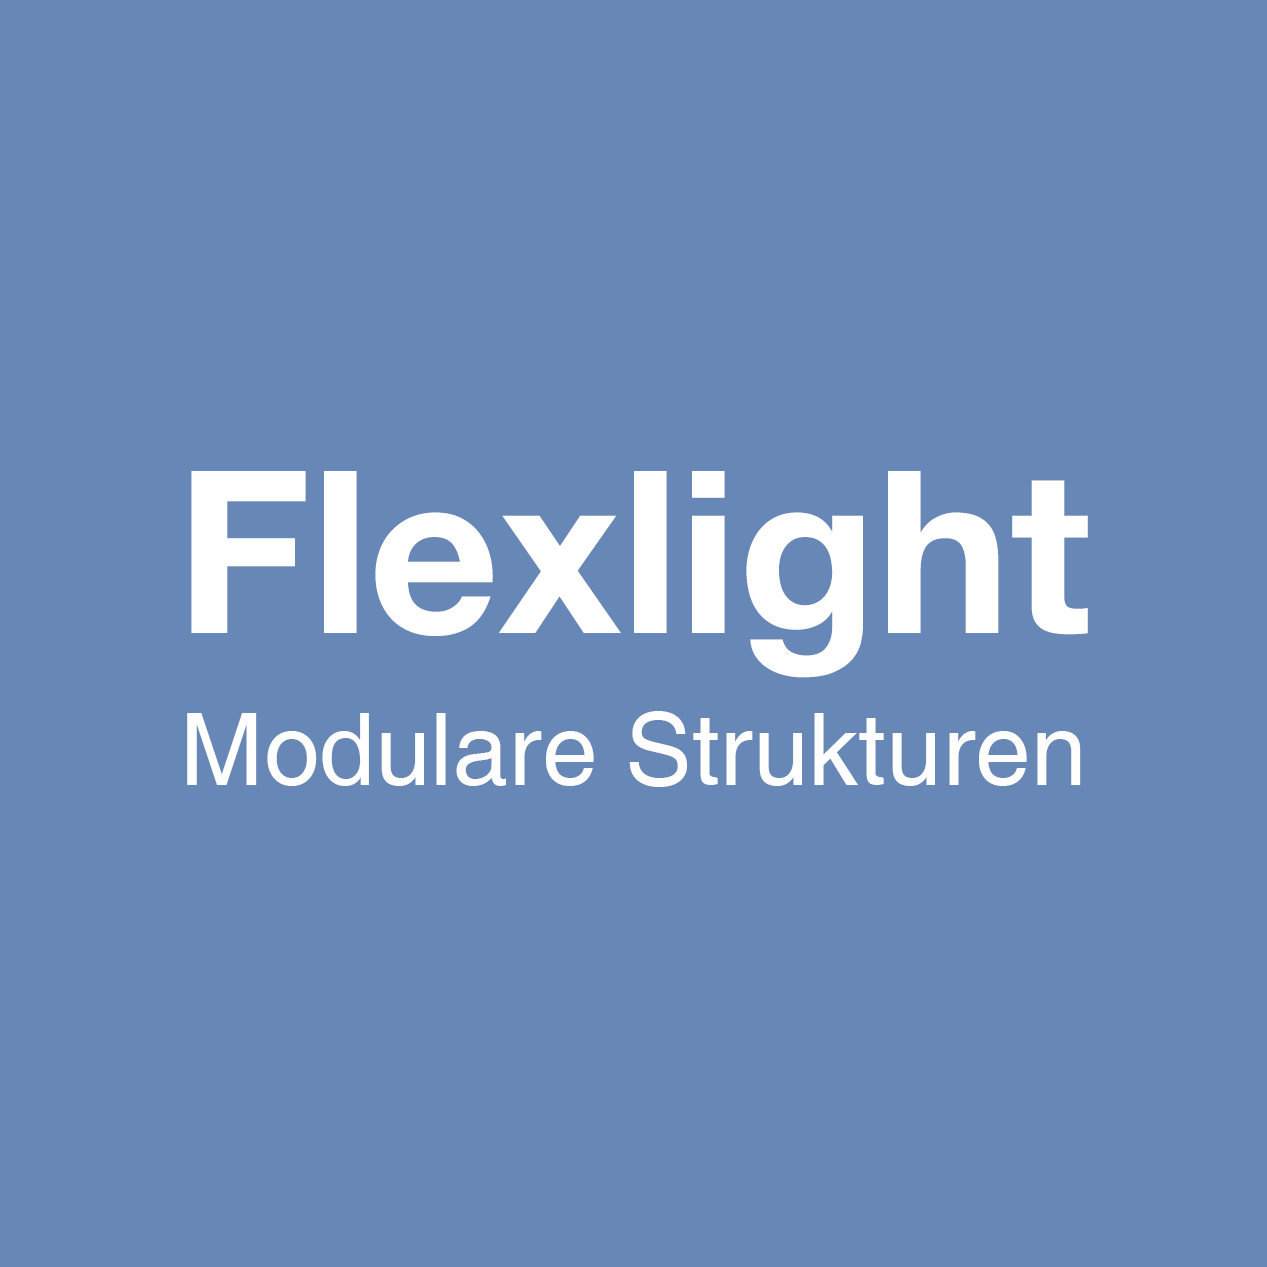 flexlight range